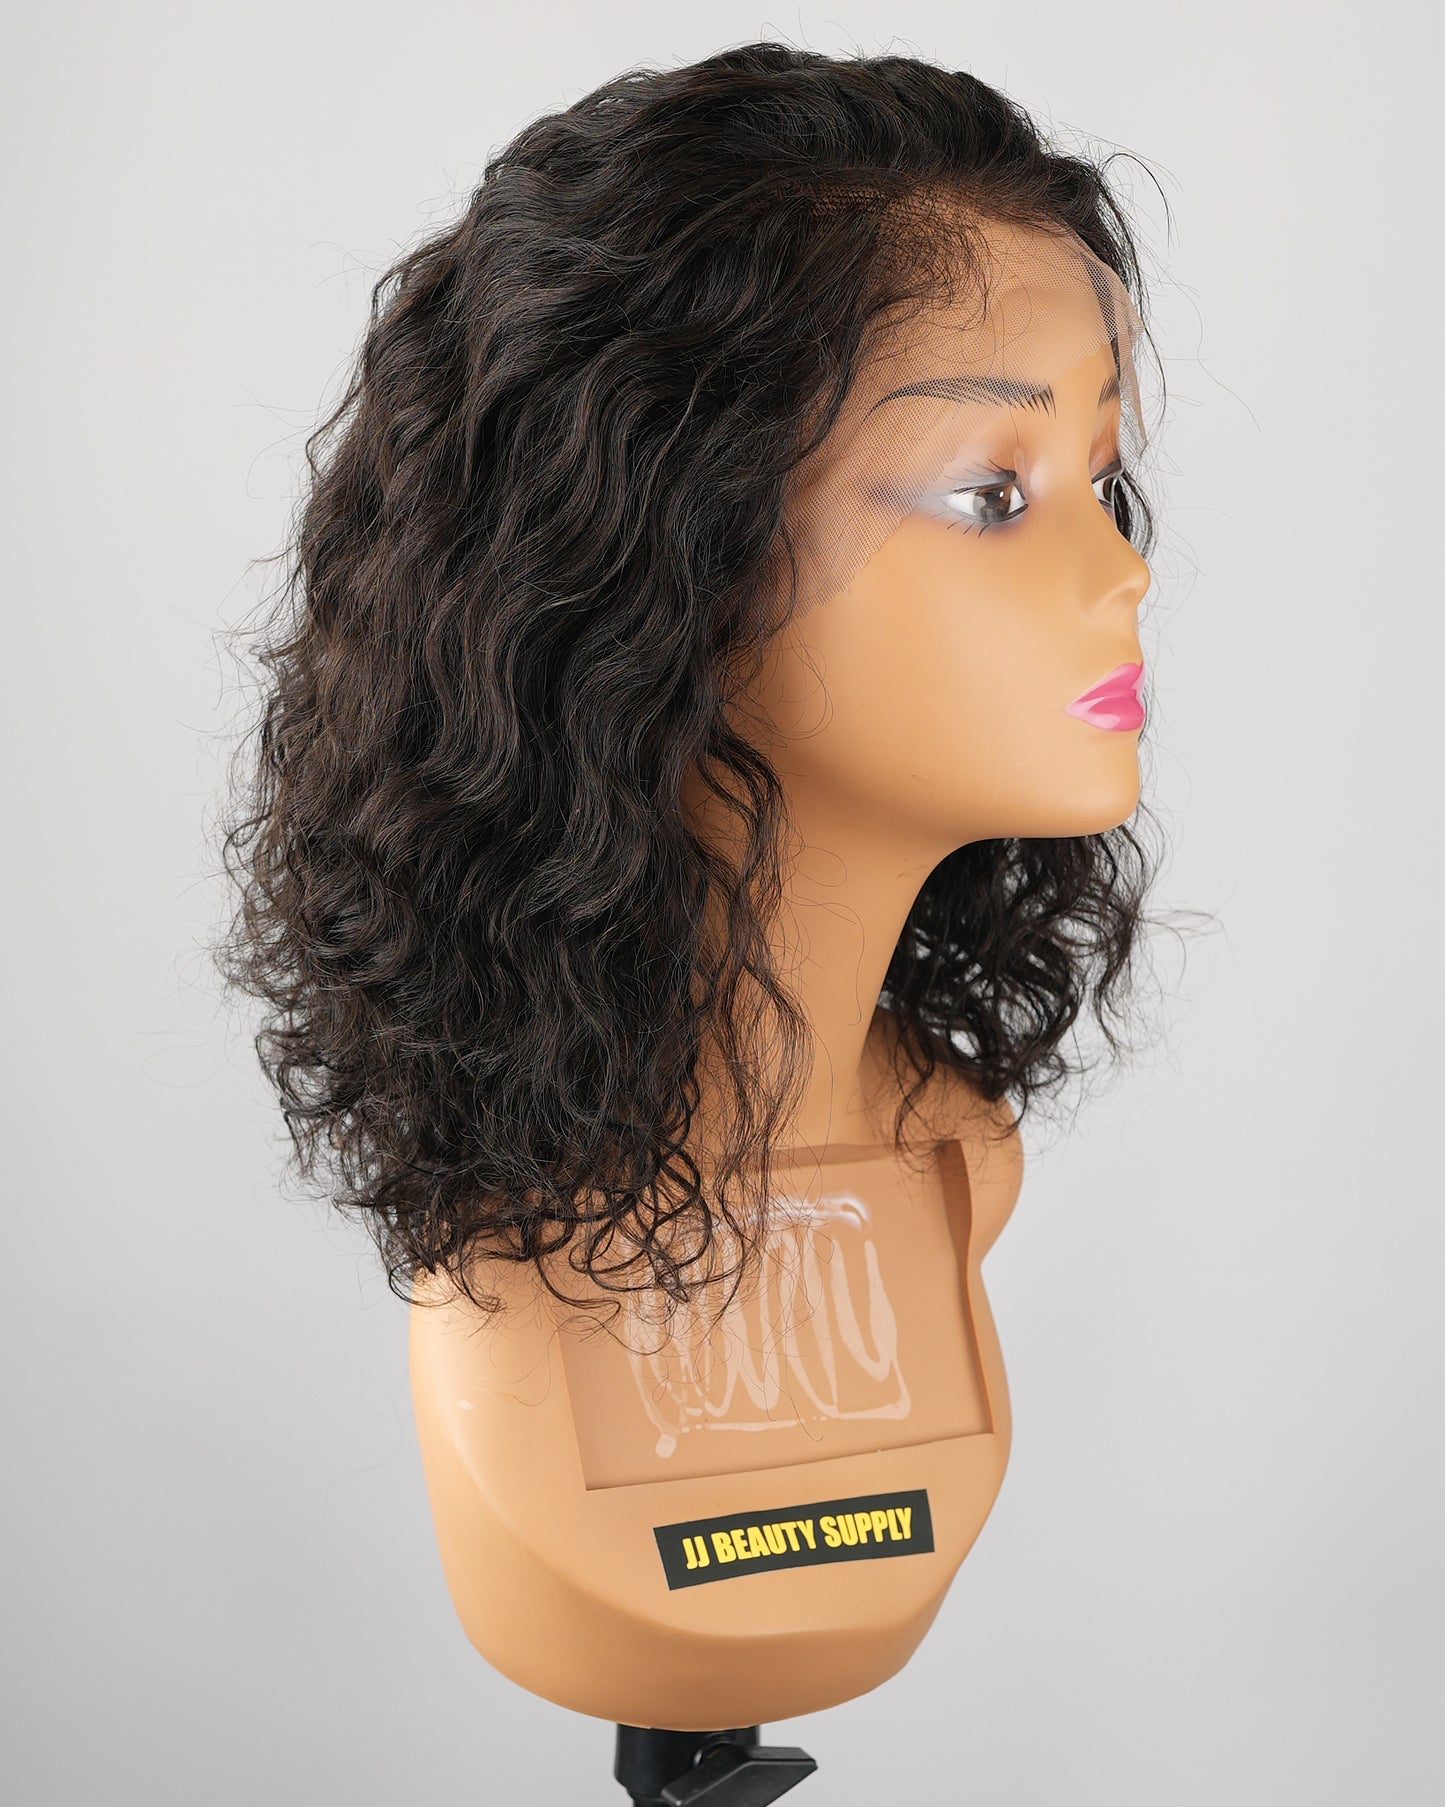 Bobbi Boss® MHLF 534 Rahmiel Bundle Hair 13x4 Frontal Unprocessed Human Hair Wig